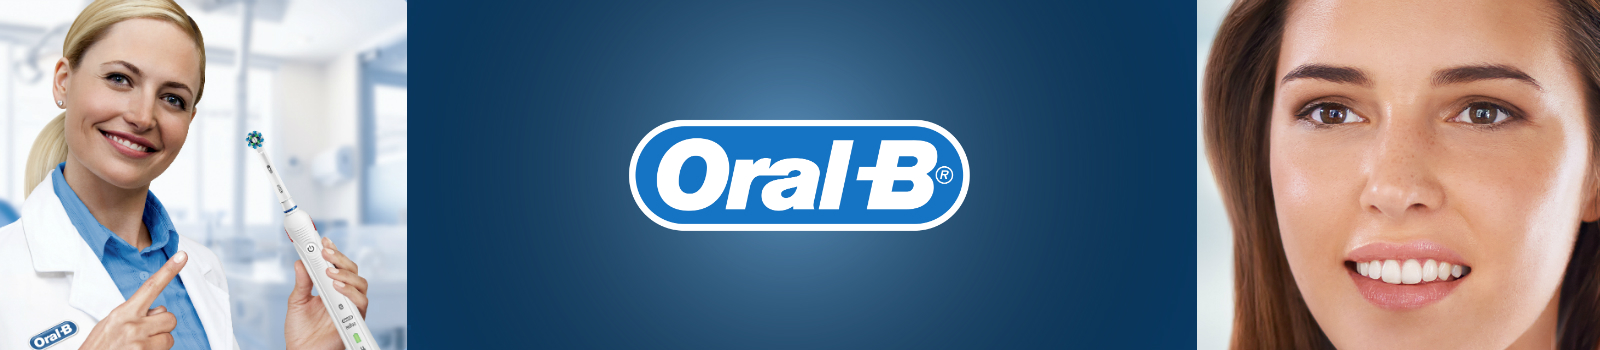 зубные щётки Орал-Би Браун